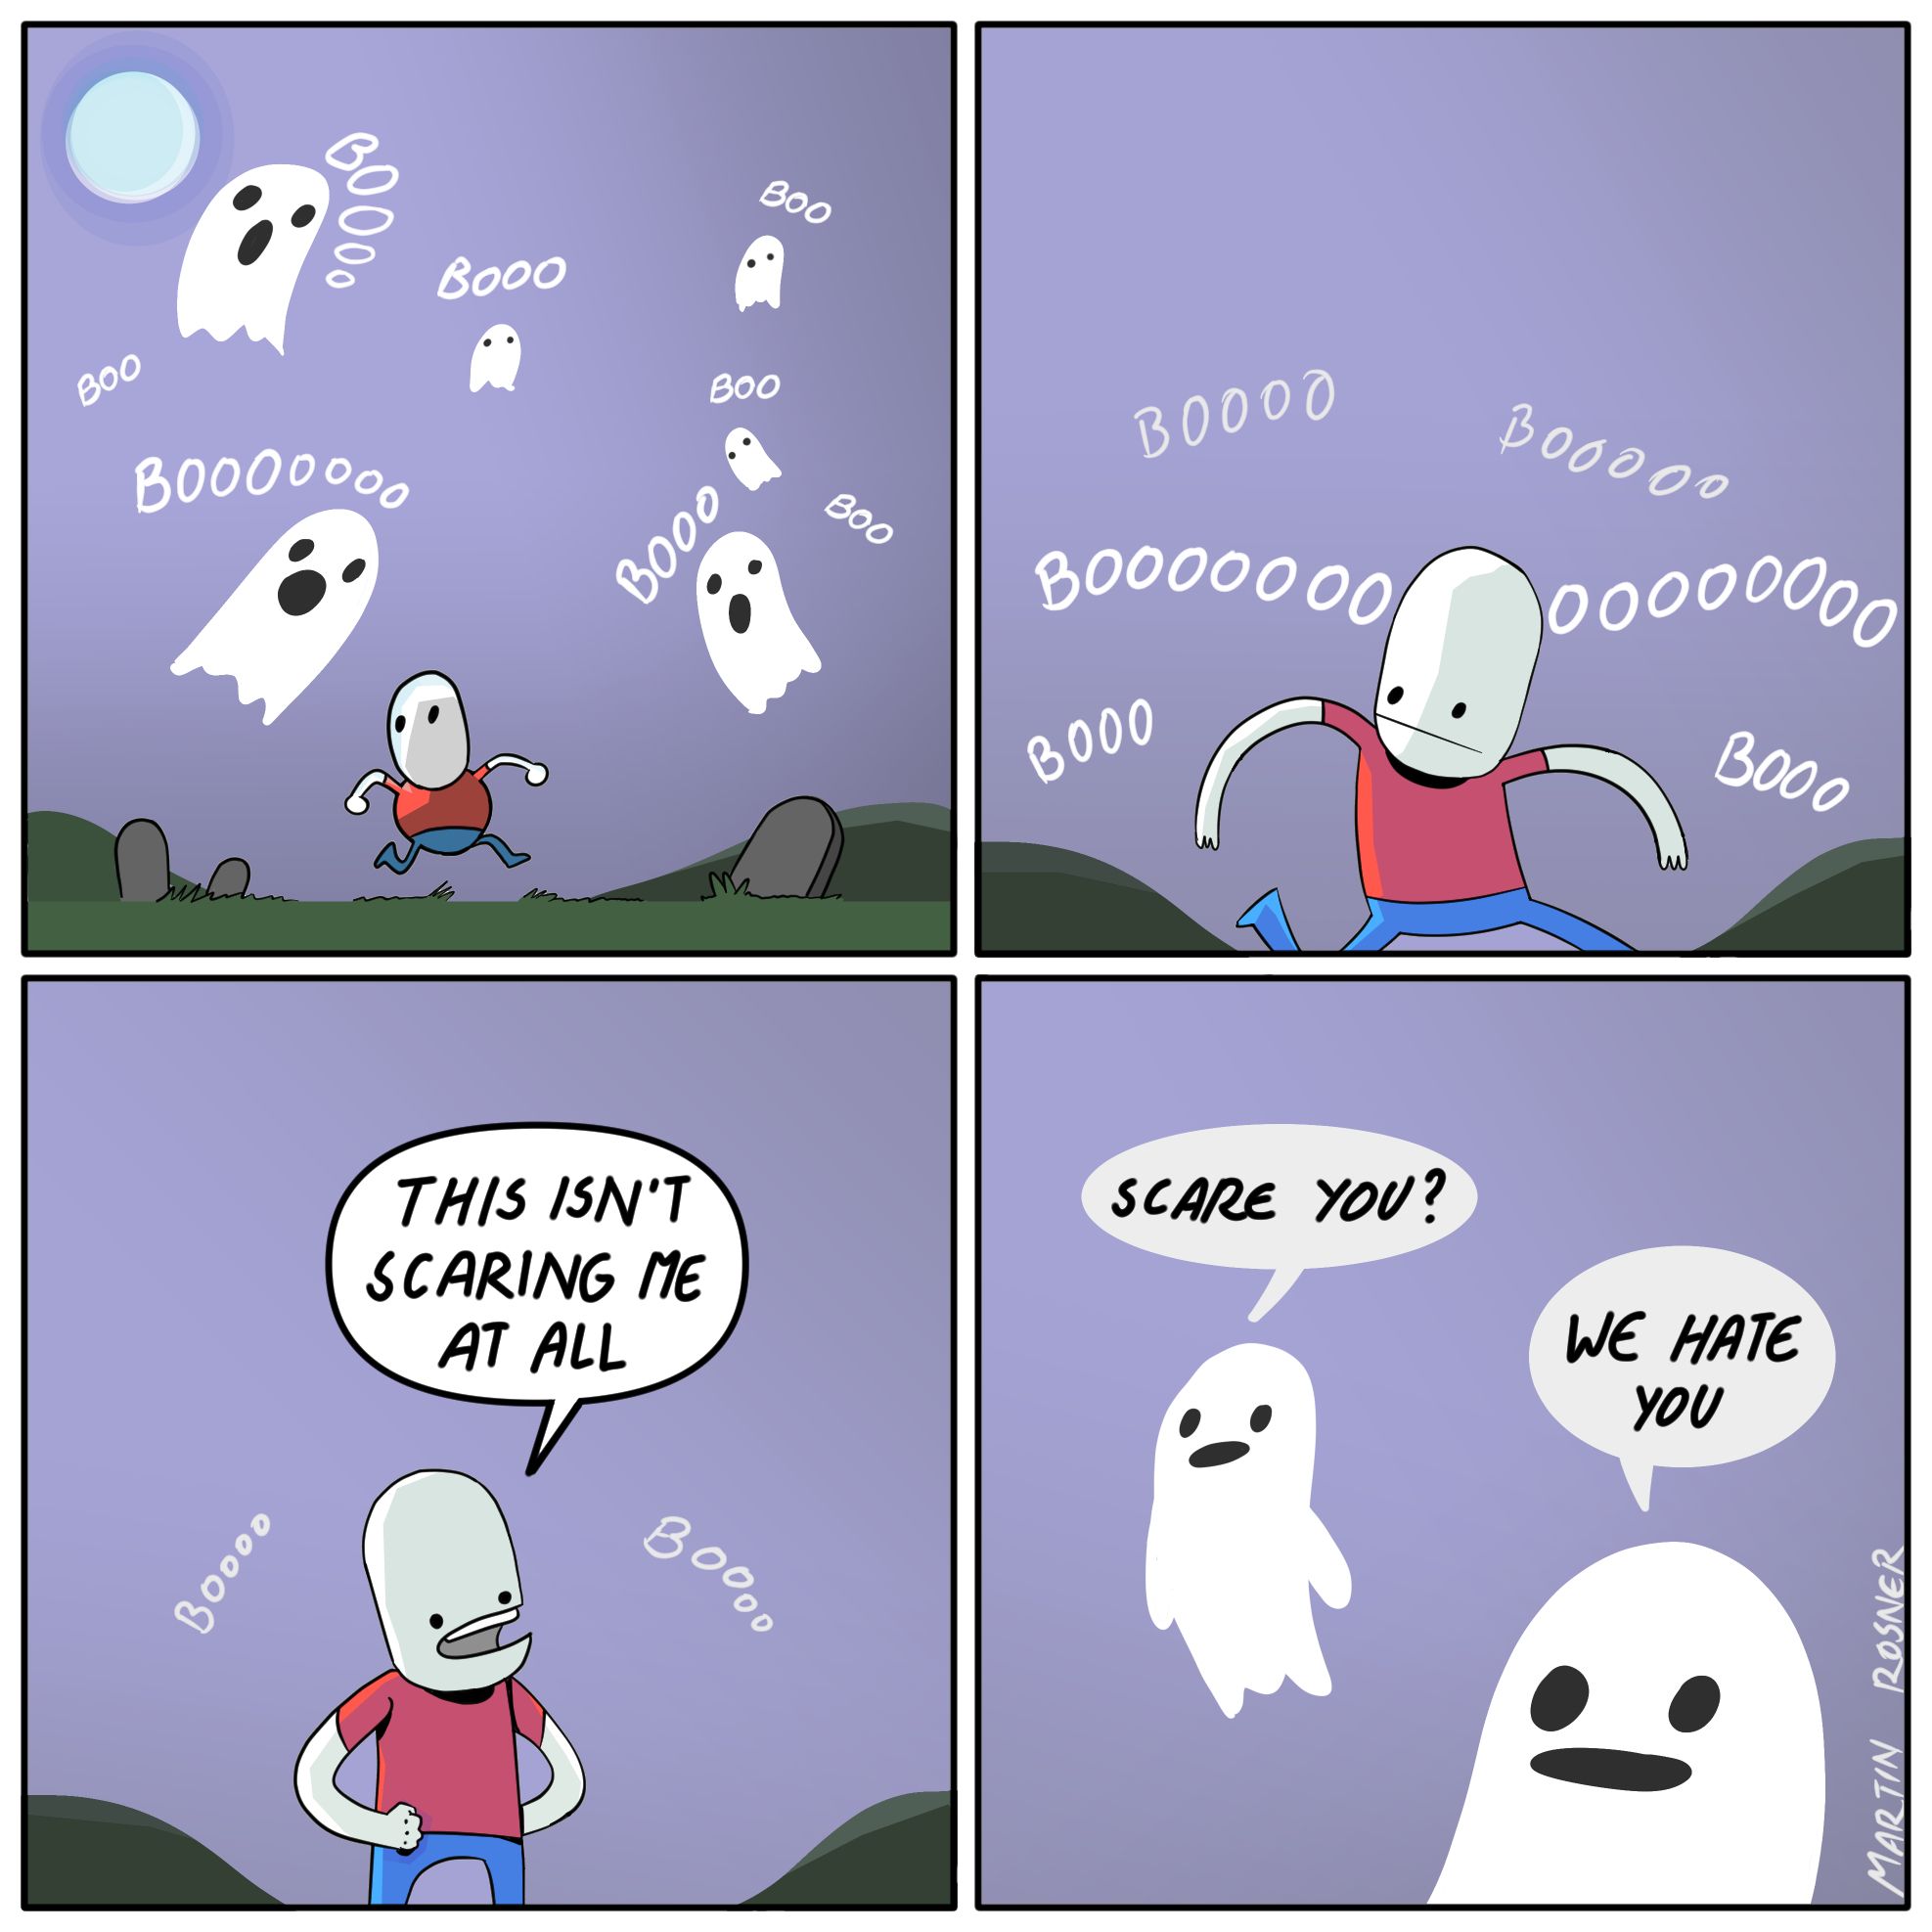 The Boo